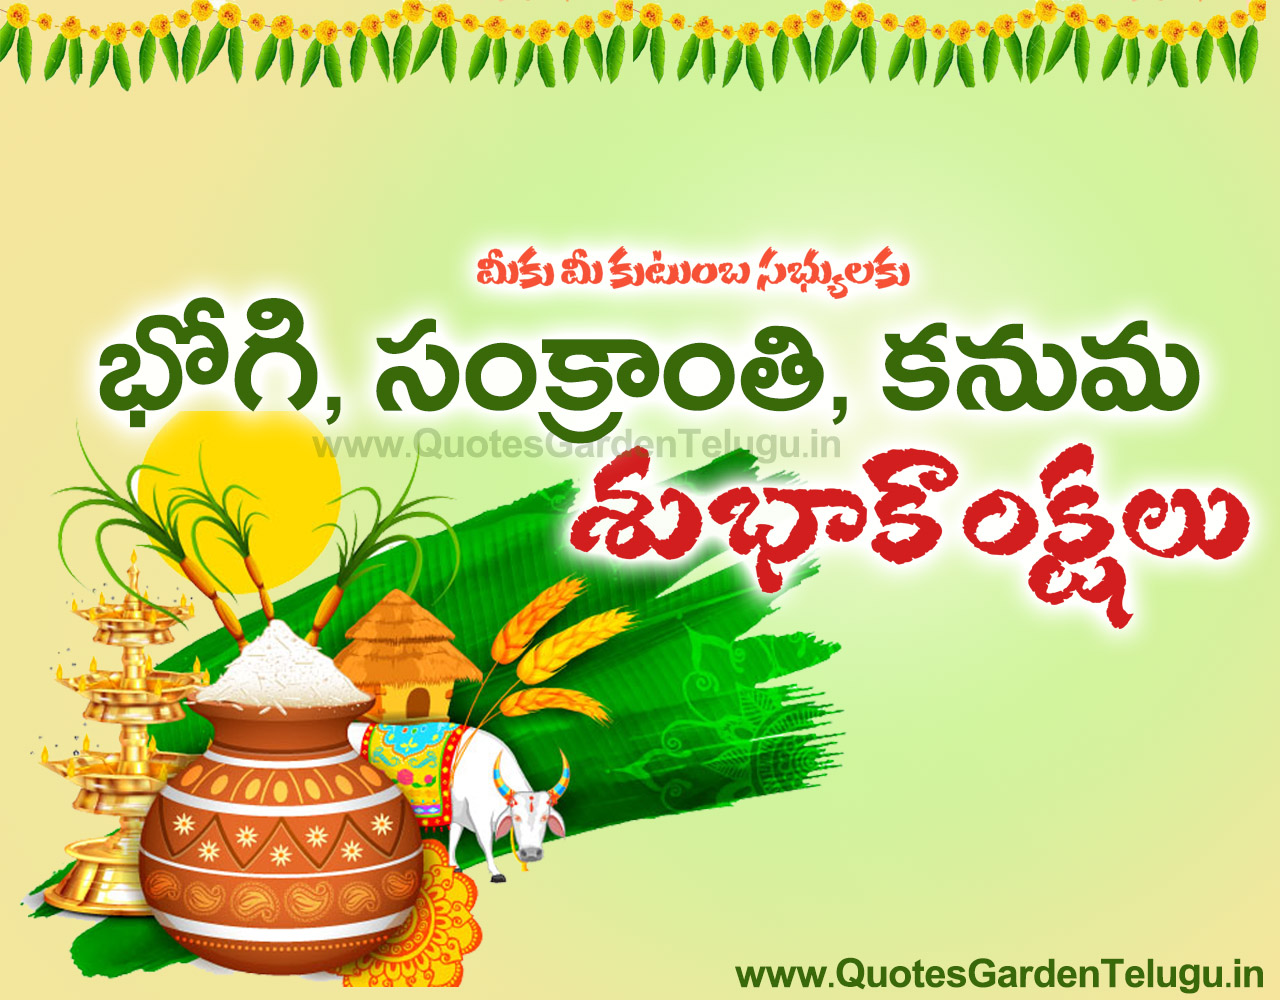 Happy Sankranthi Kanuma greetings images in telugu | QUOTES GARDEN ...